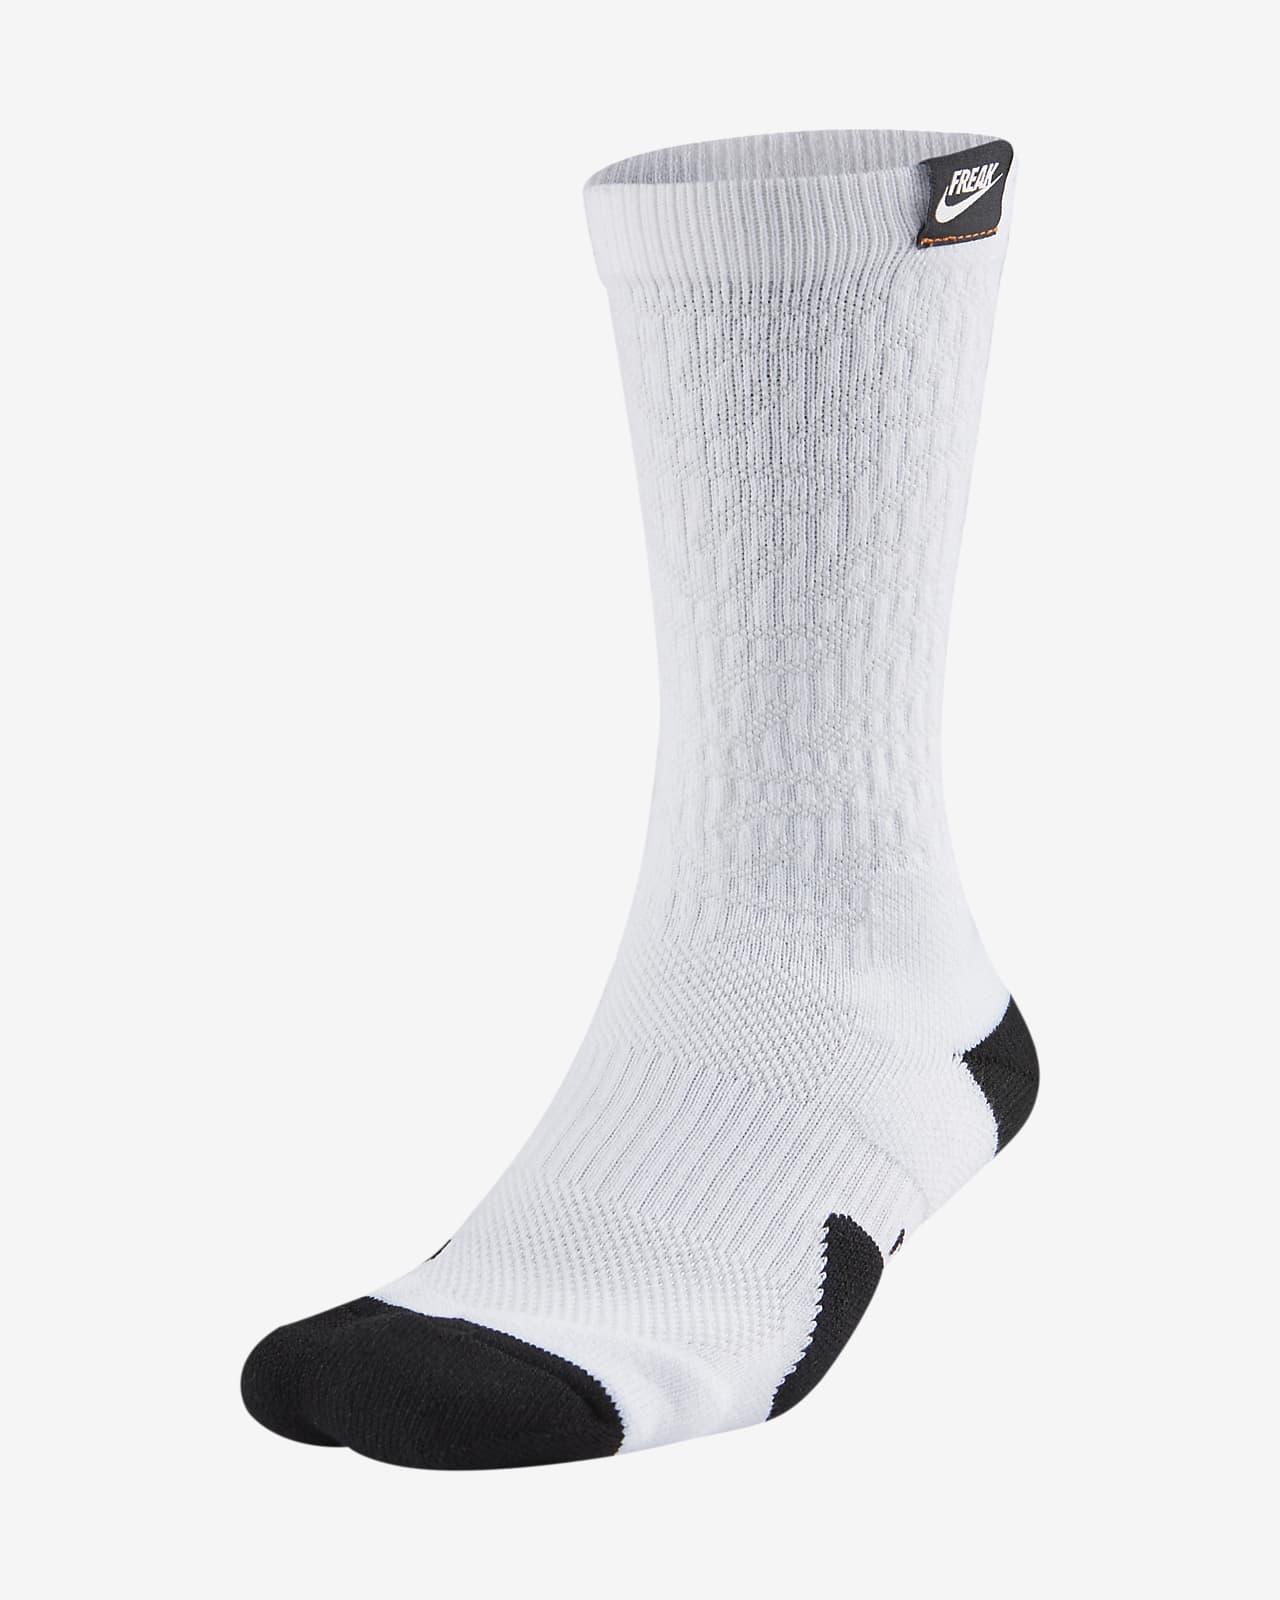 nike elite basketball socks